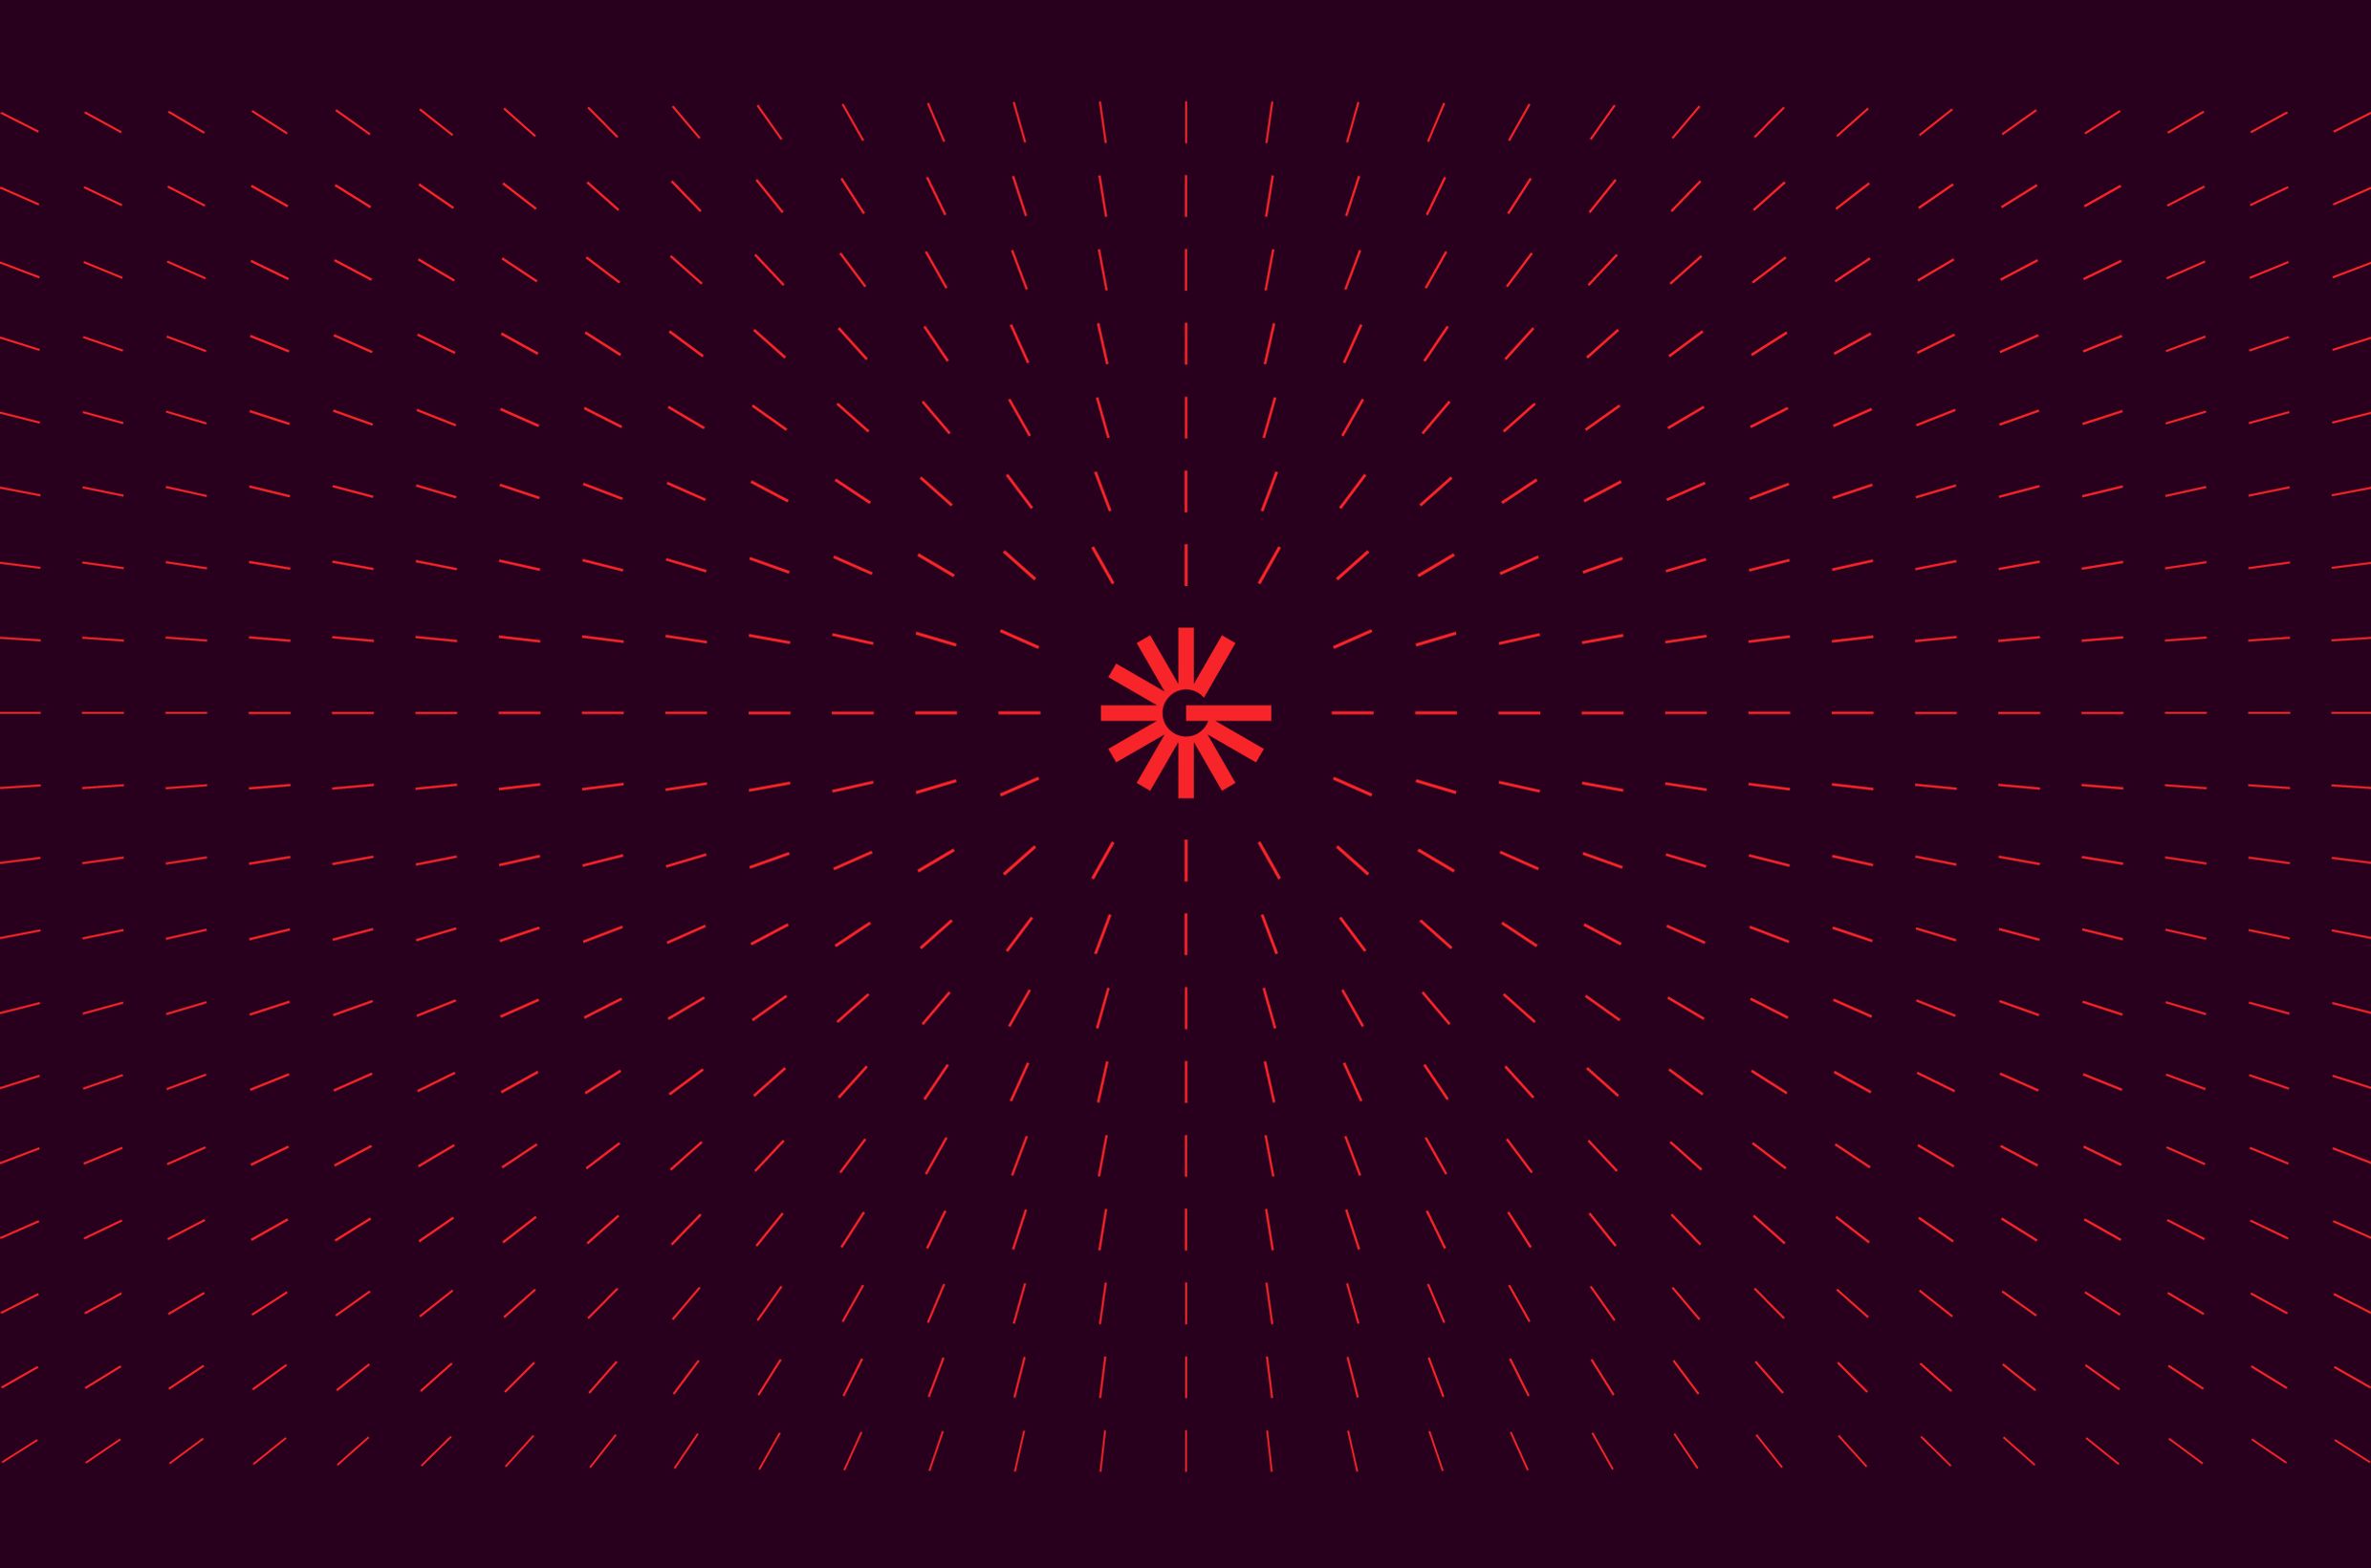 The Glamox symbol with rays around it. Red on dark background.